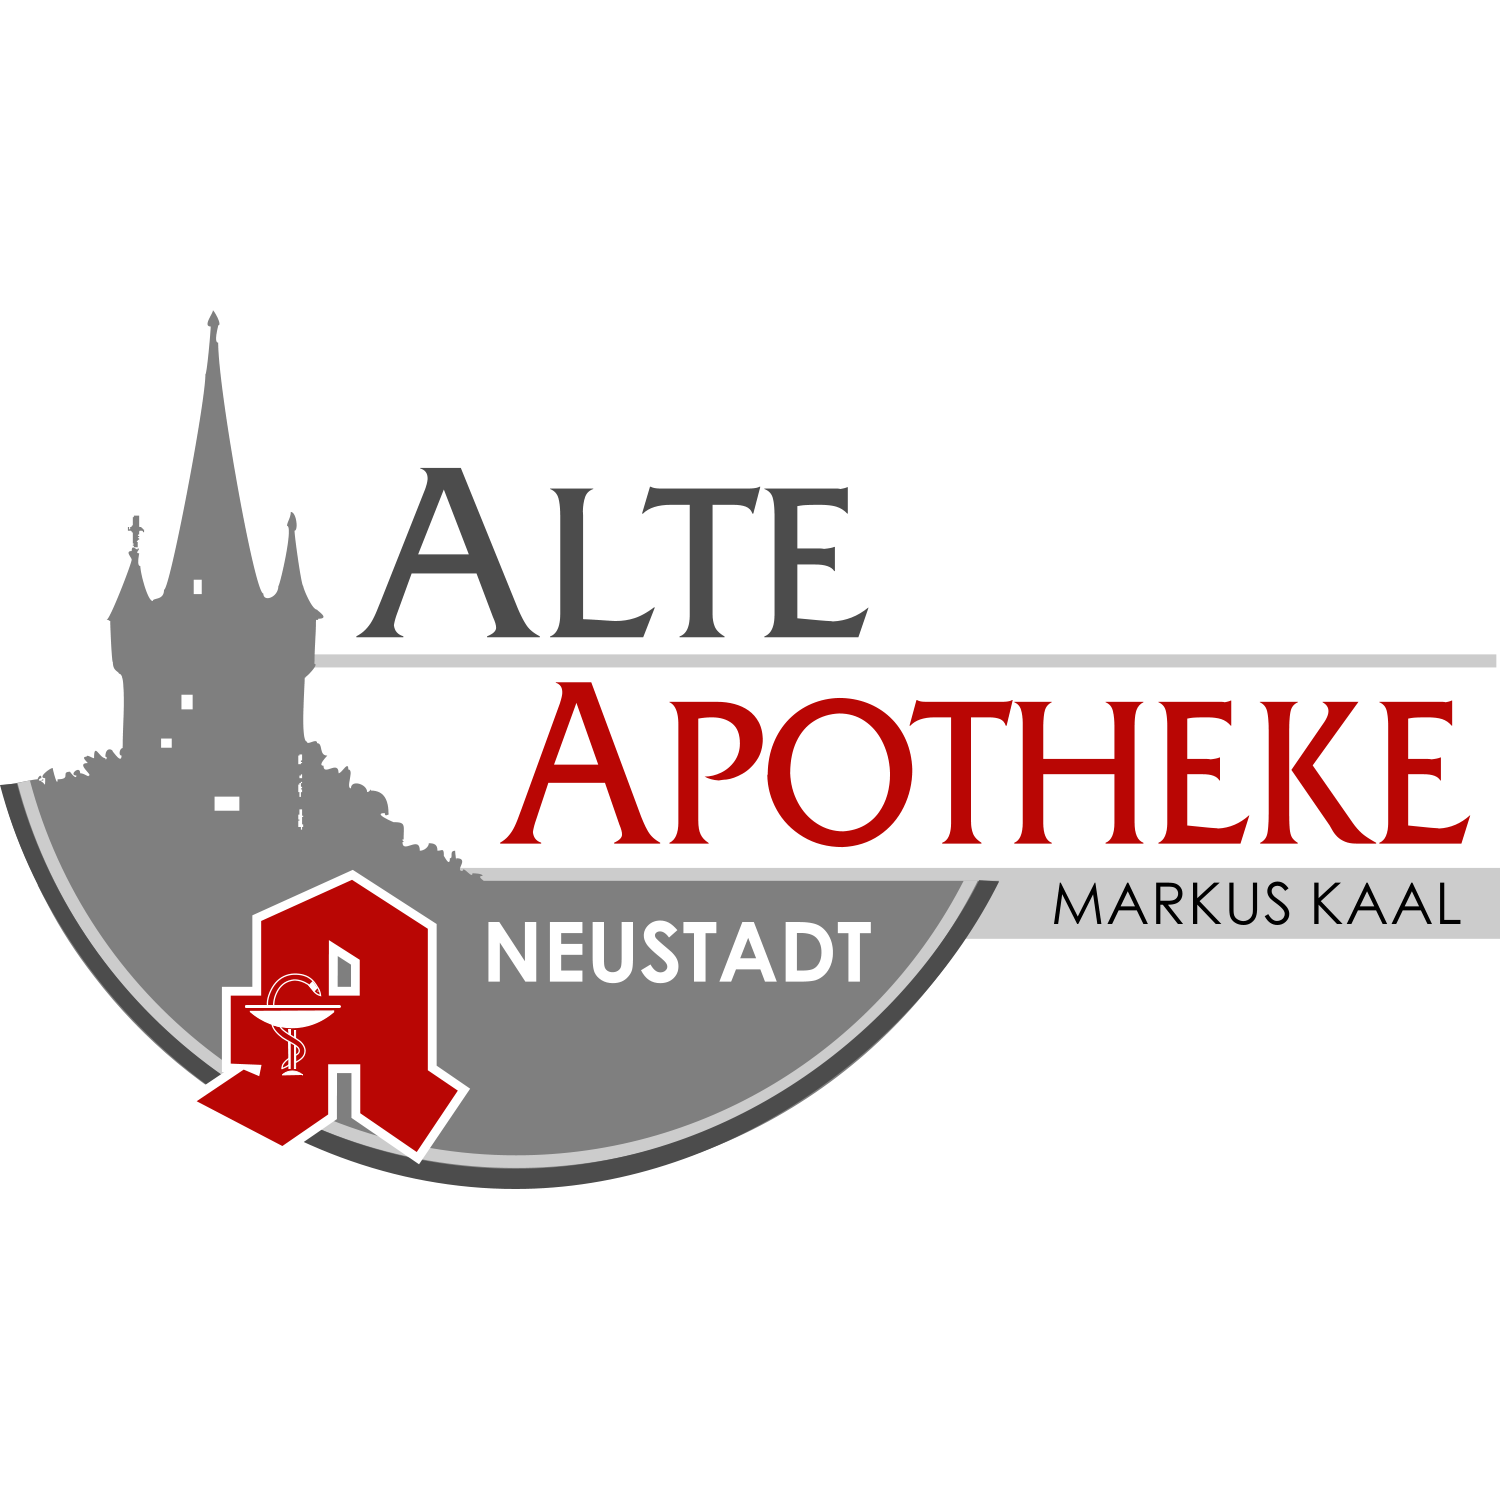 Logo Logo der Alte Apotheke